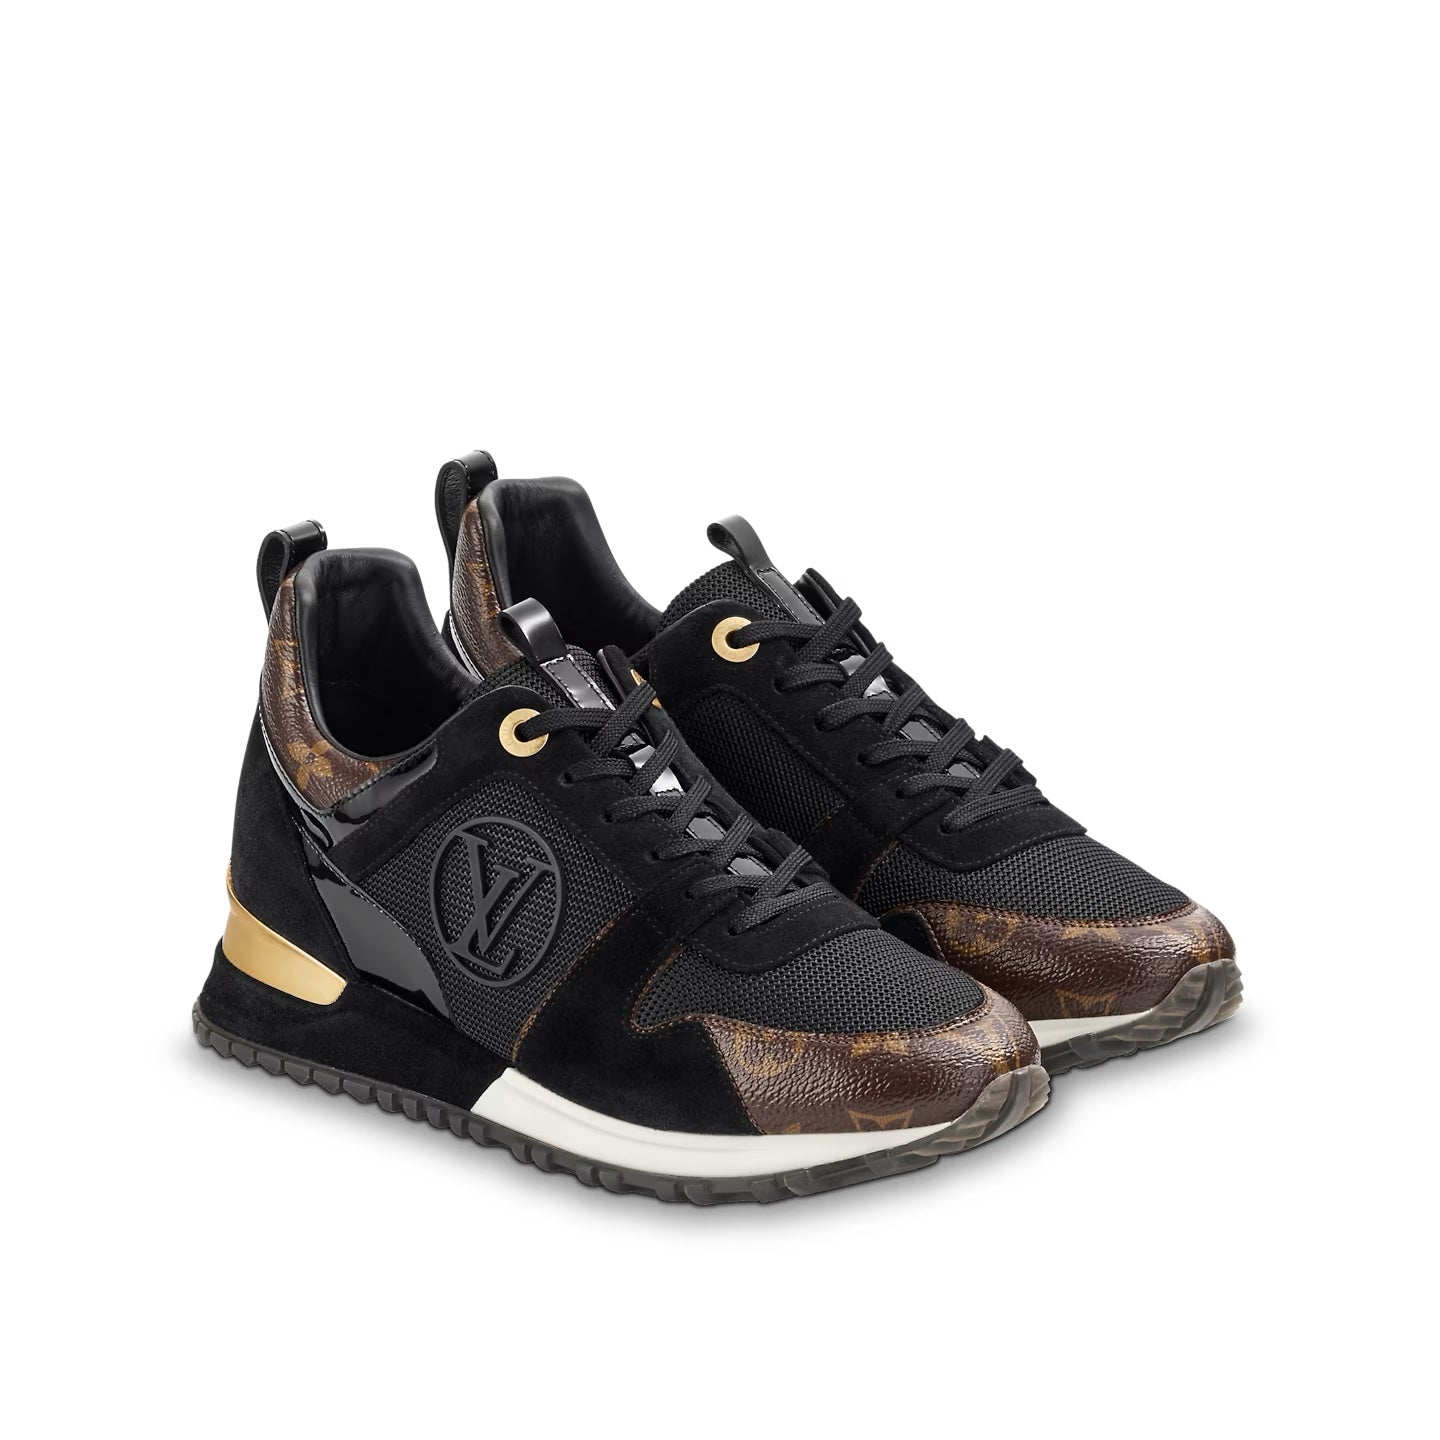 Louis Vuitton, Shoes, Louis Vuitton Run Away Sneaker